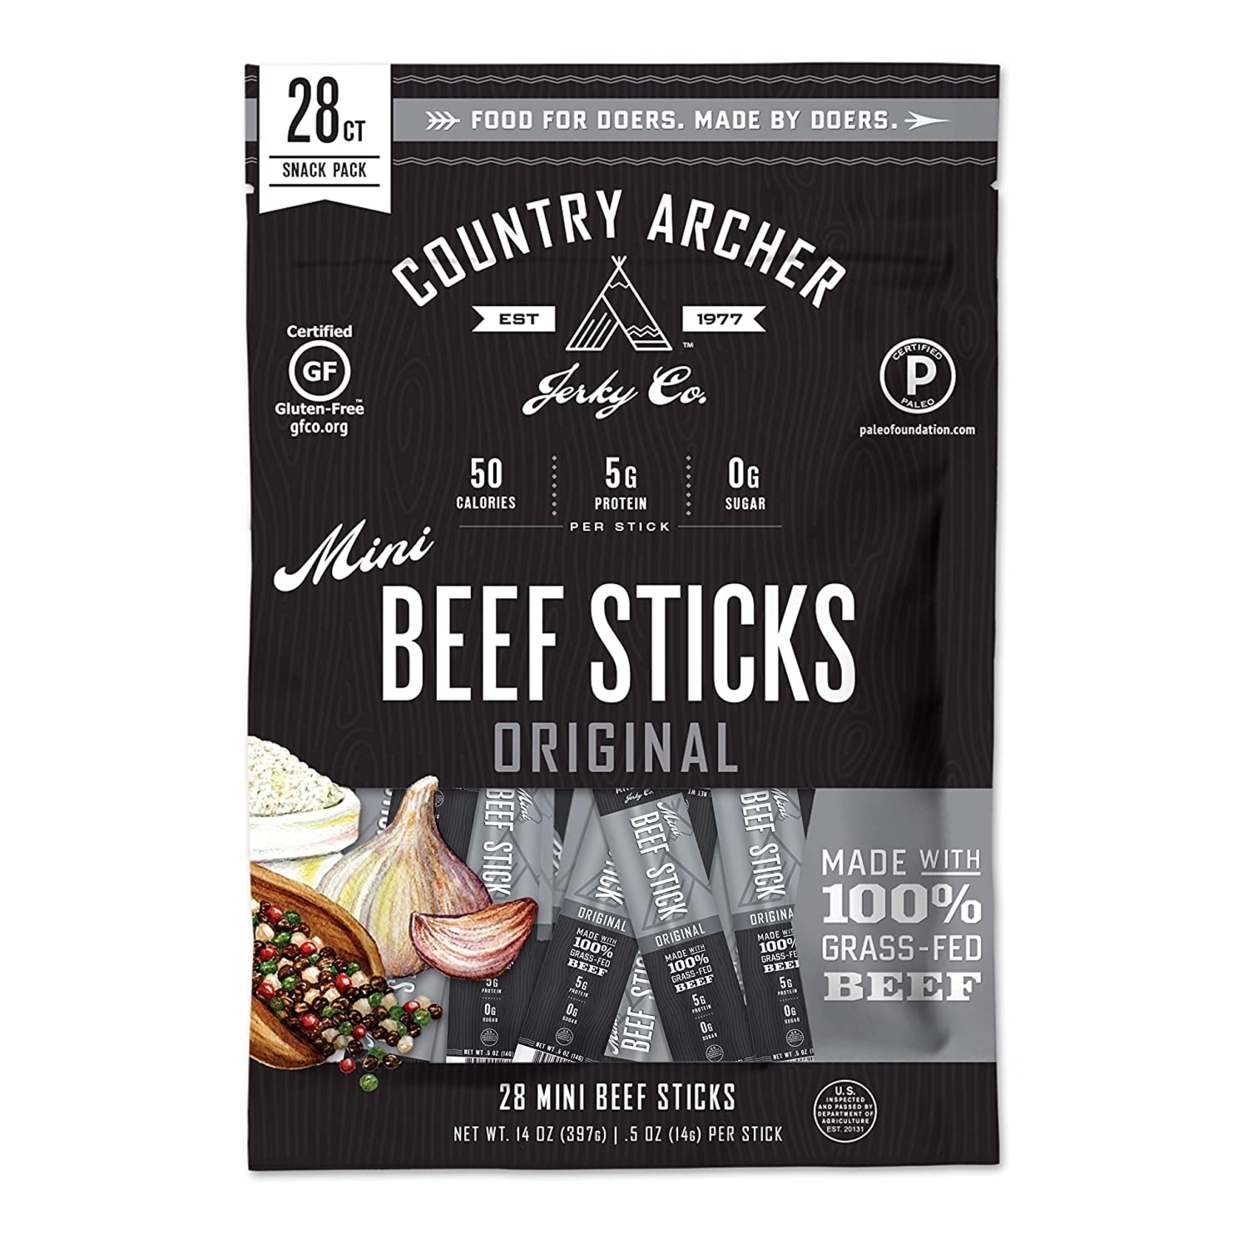 Country Archer Mini Beef Sticks, Original, Grass-Fed, 28 Count